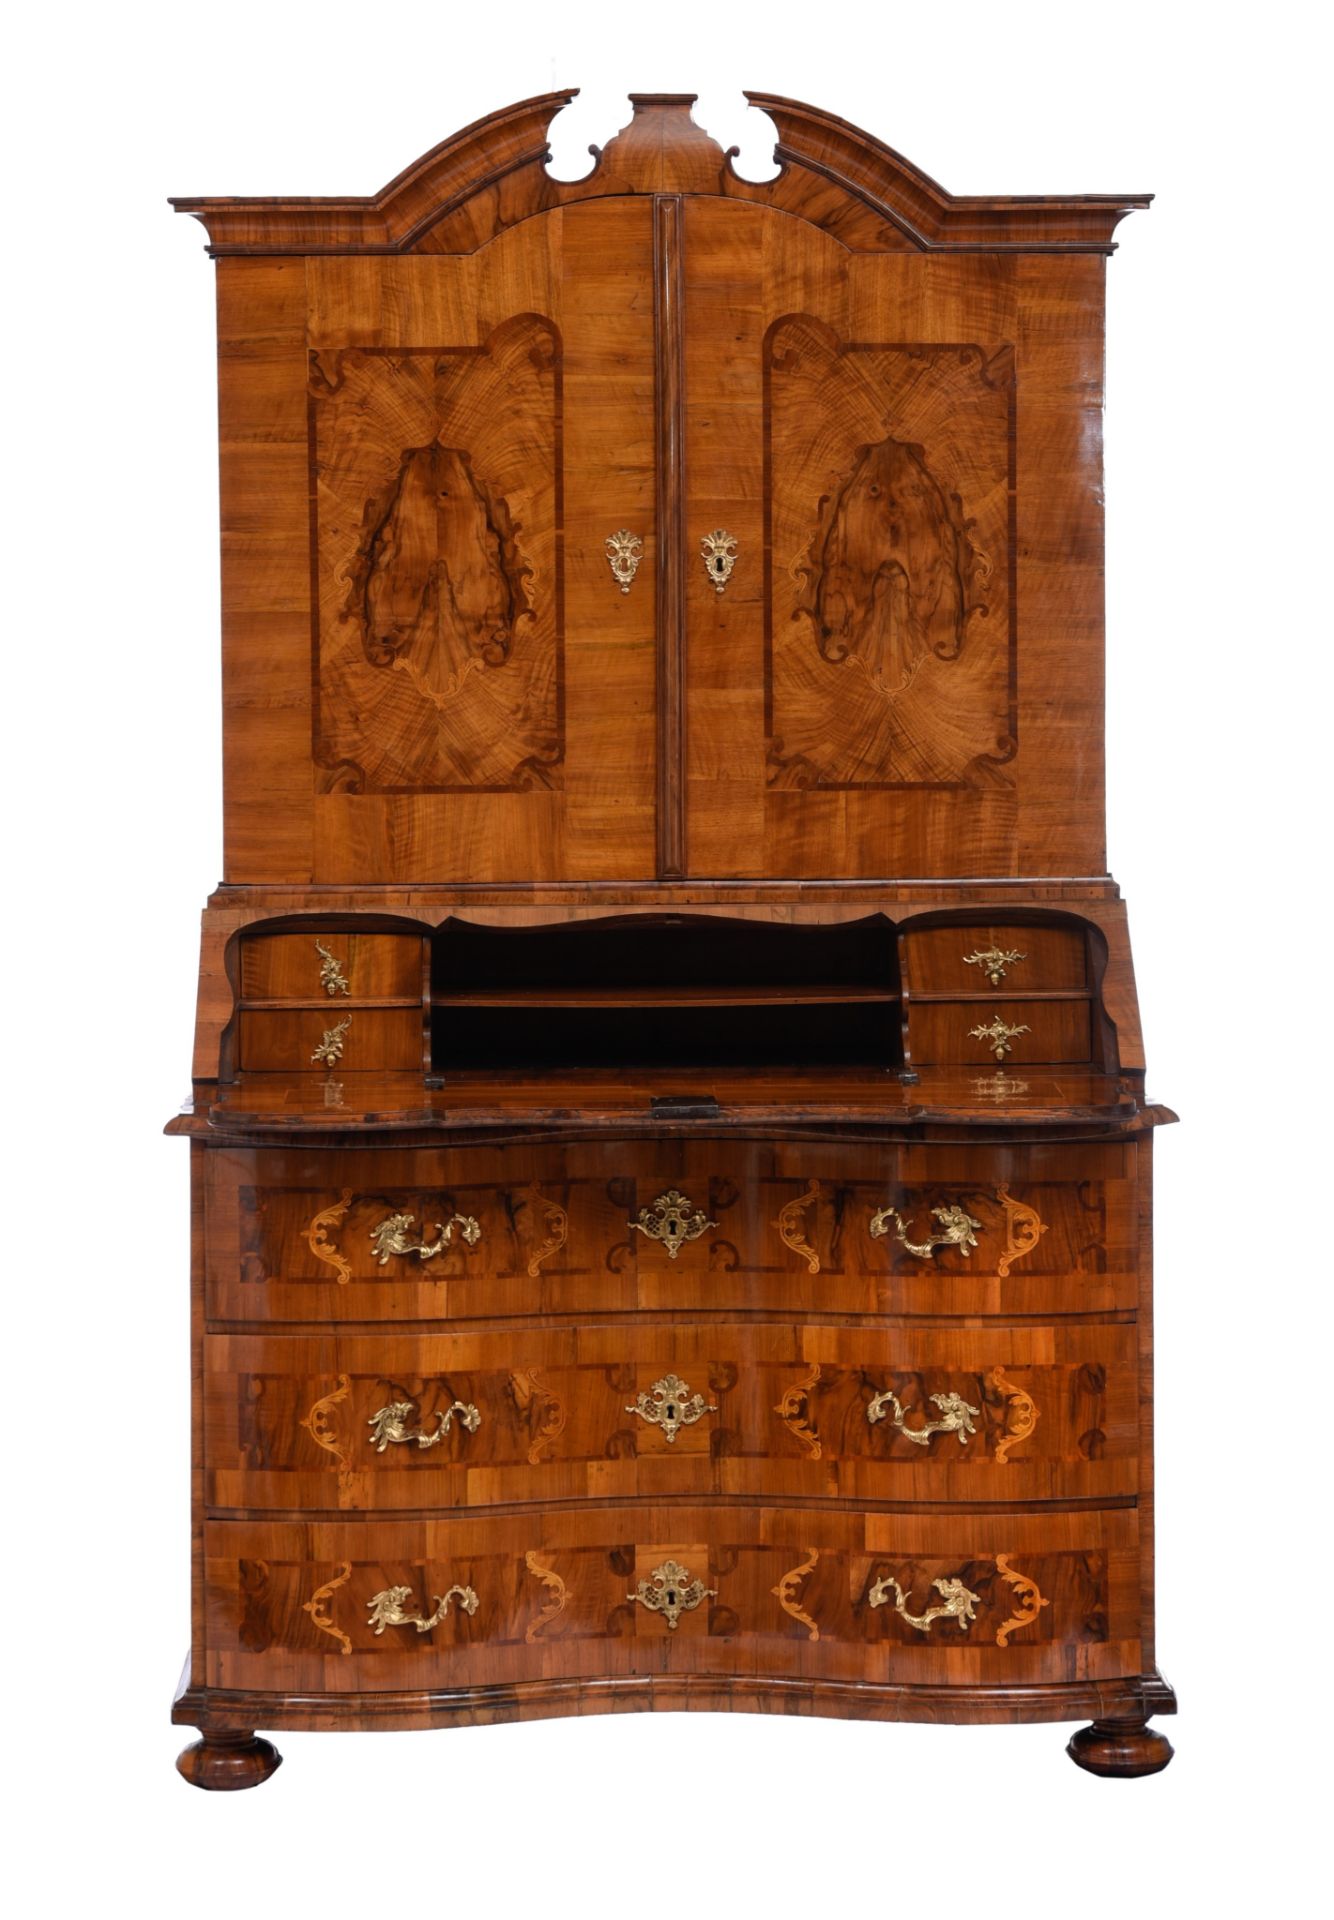 A very fine Rococo walnut bureau cabinet, mid 18thC, H 227 - W 135 - D 71 - 83 cm - Image 2 of 13